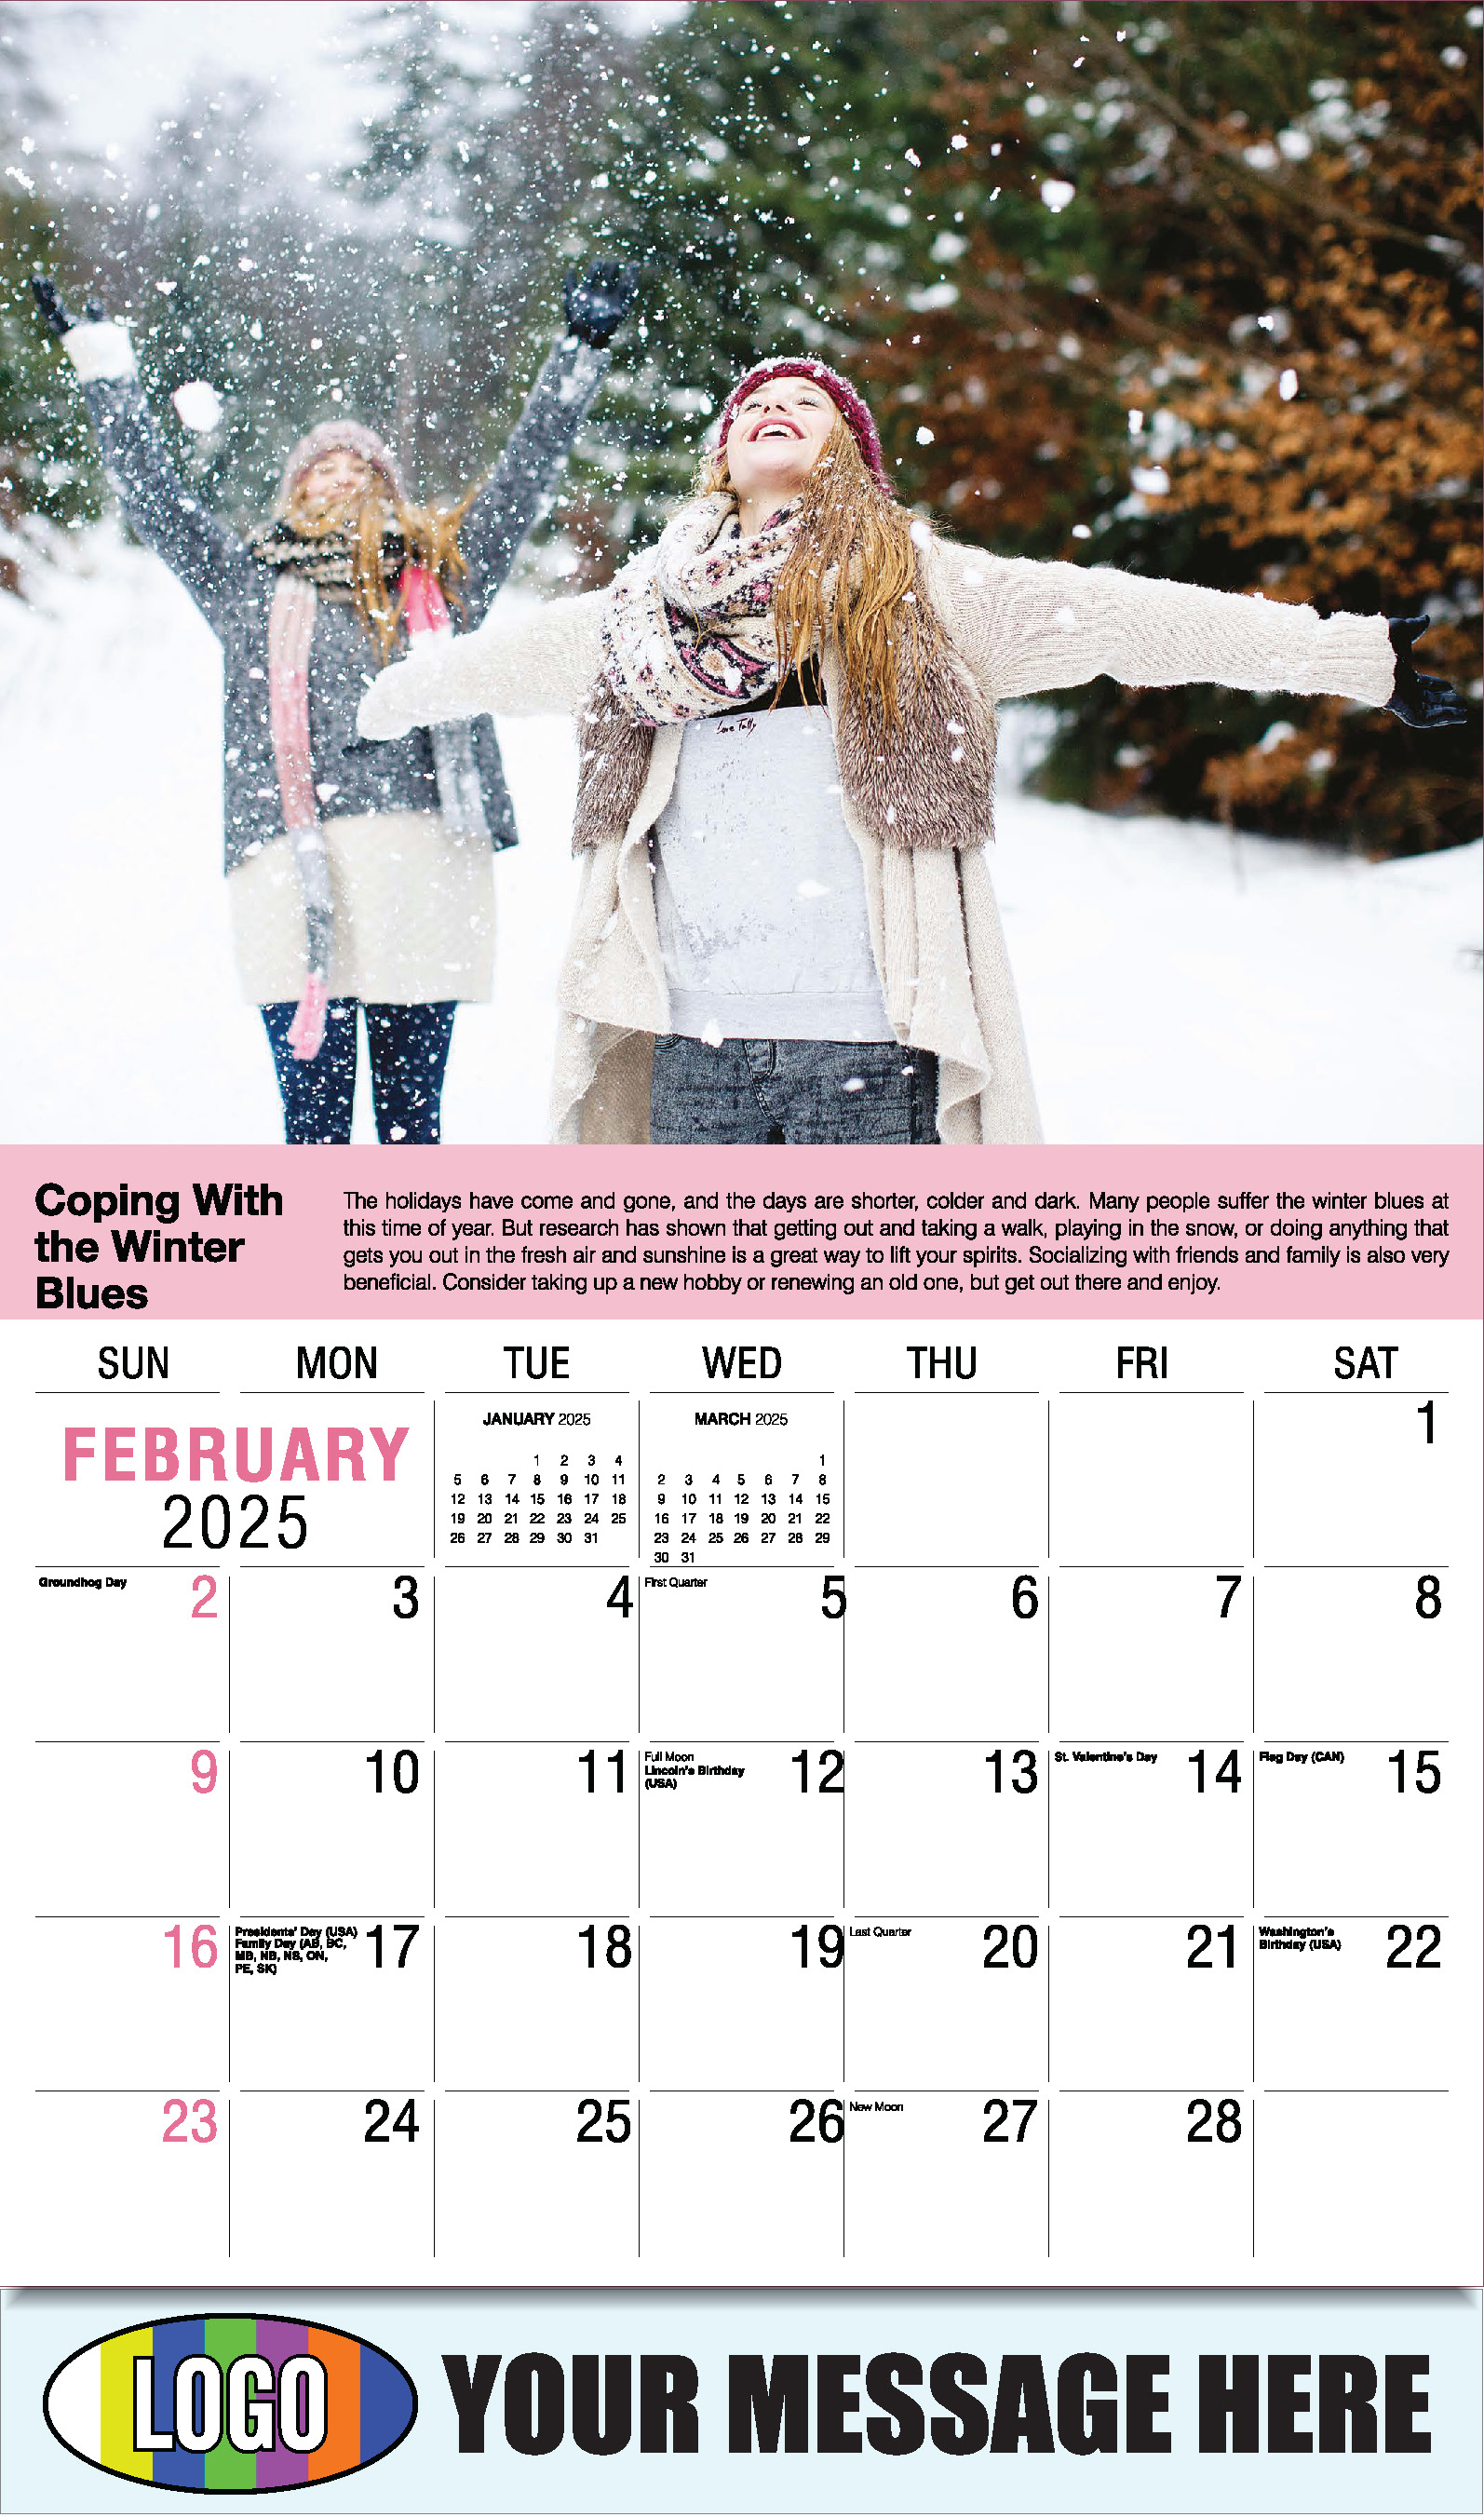 Health Tips 2025 Business Promo Wall Calendar - February